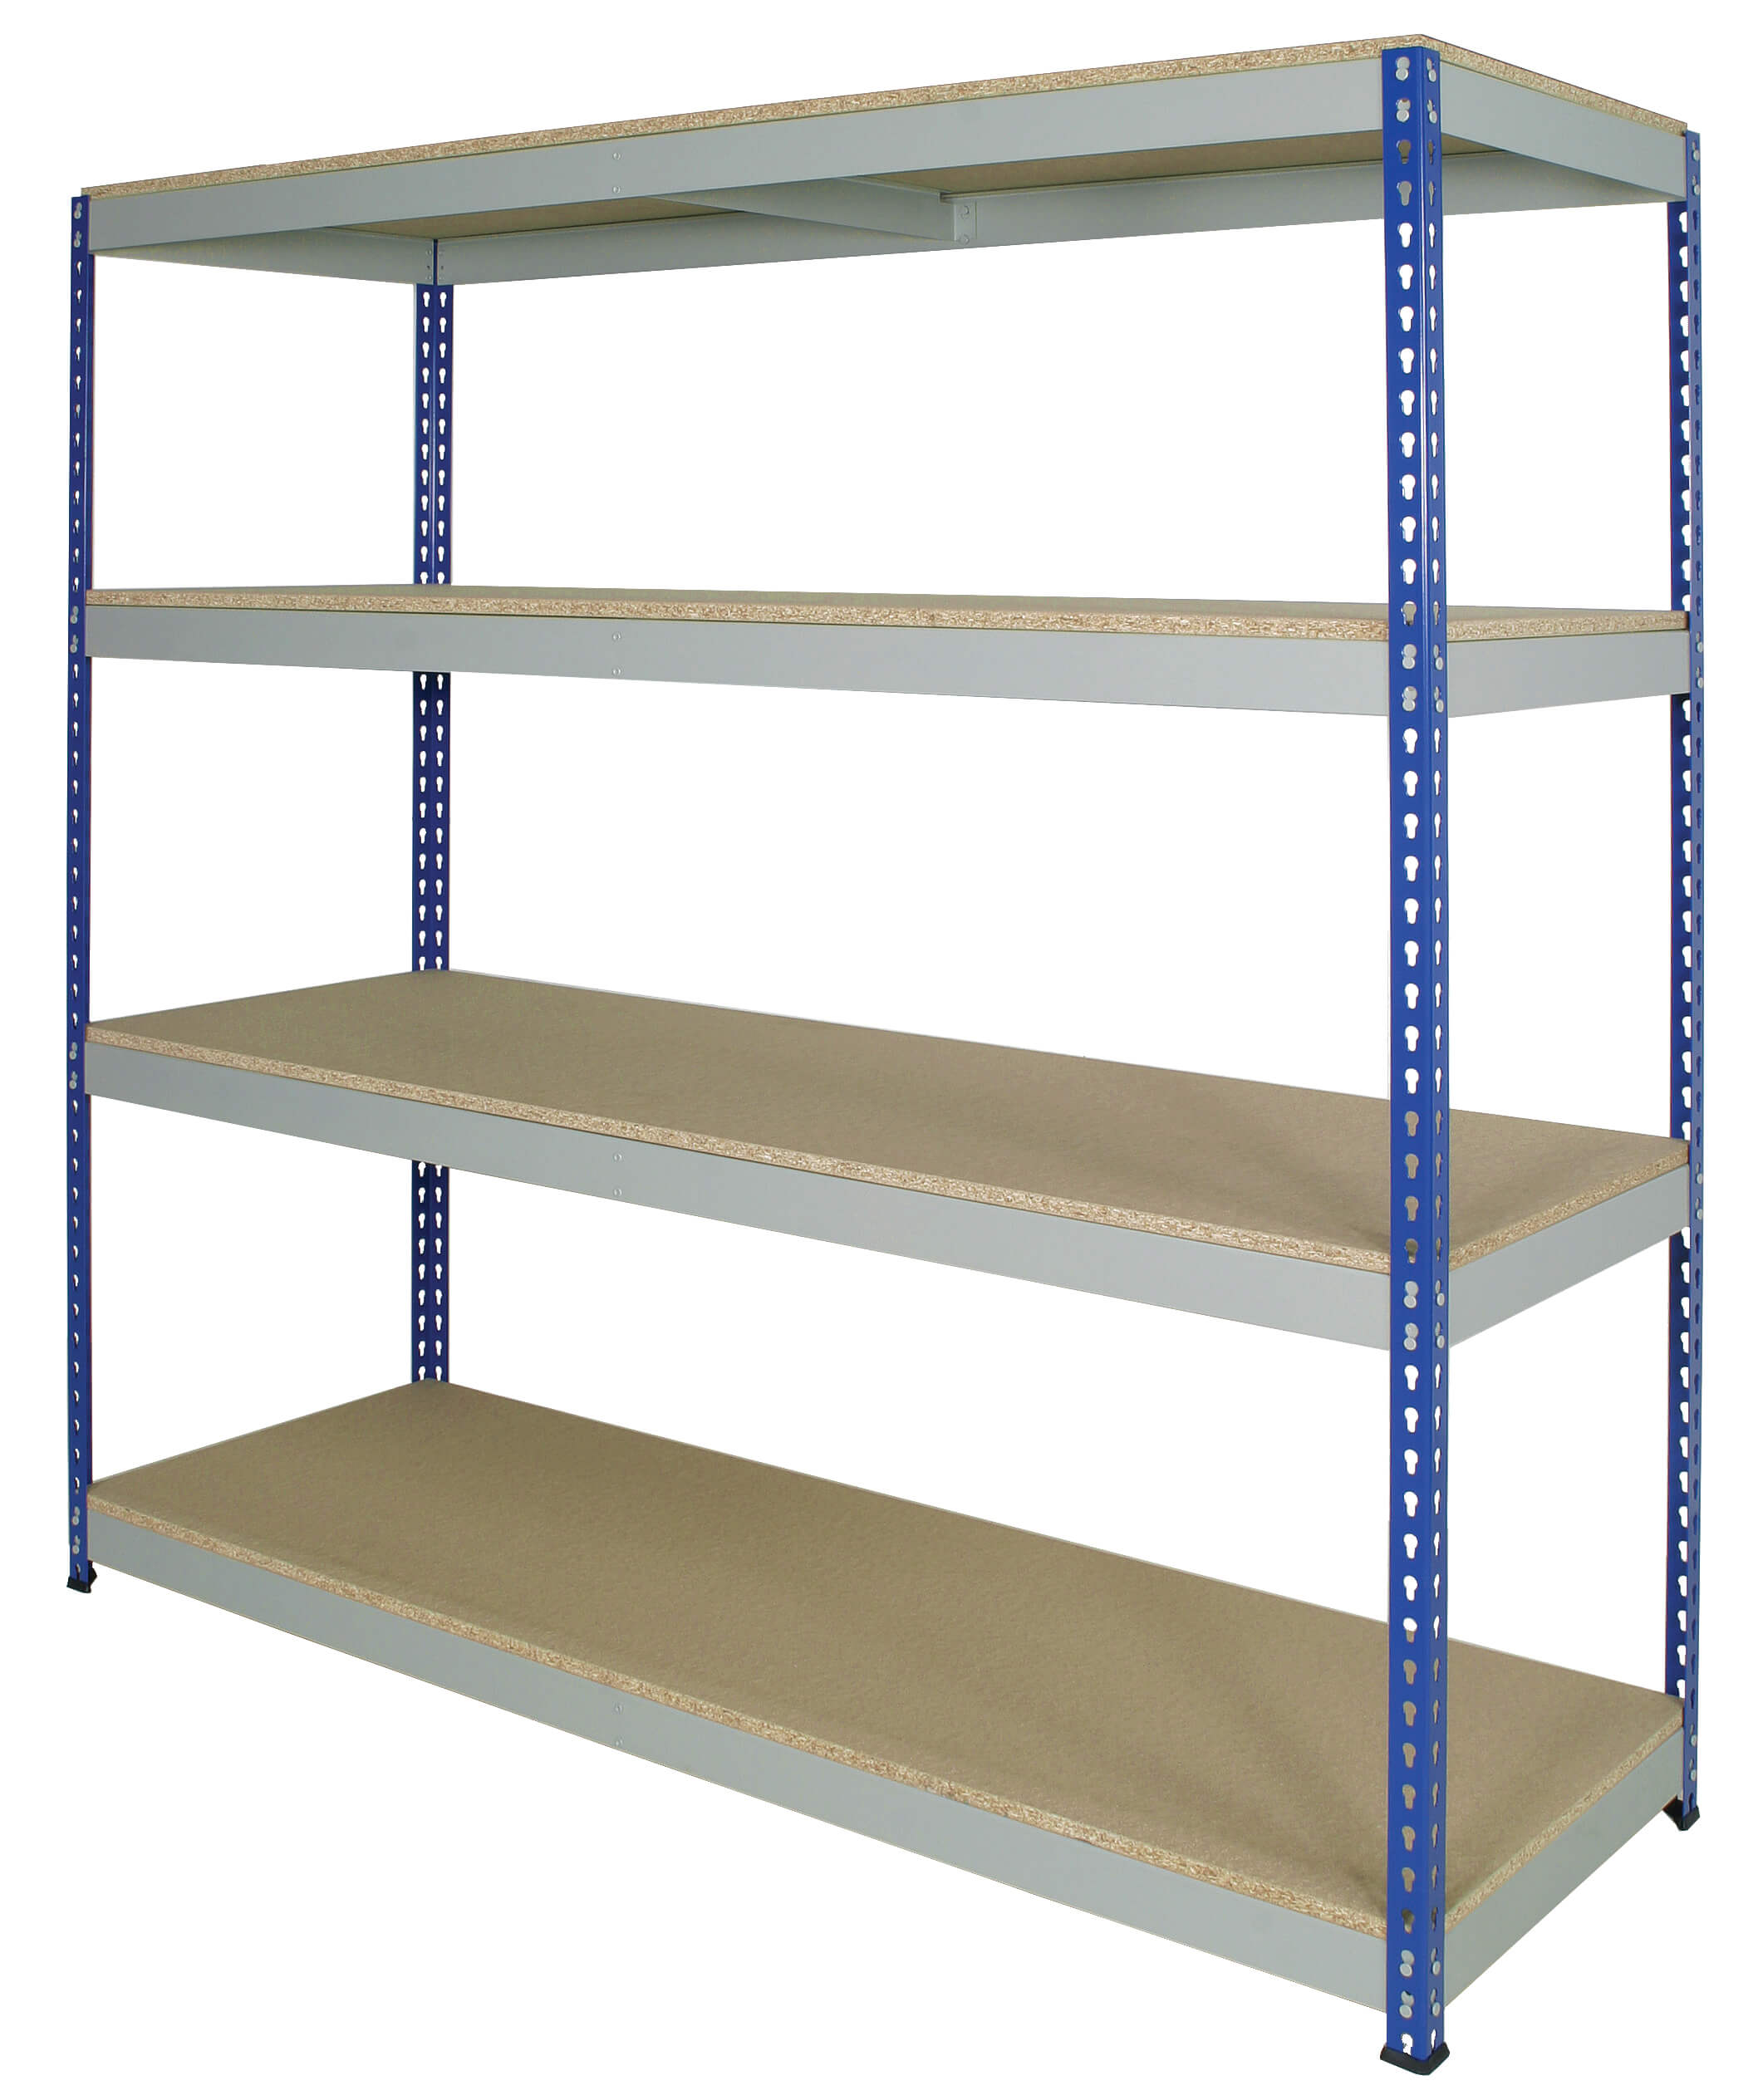 Medium Rivet Shelving, Blue/Grey 4 Shelves - 1830x1830x305mm - 300kg UDL.